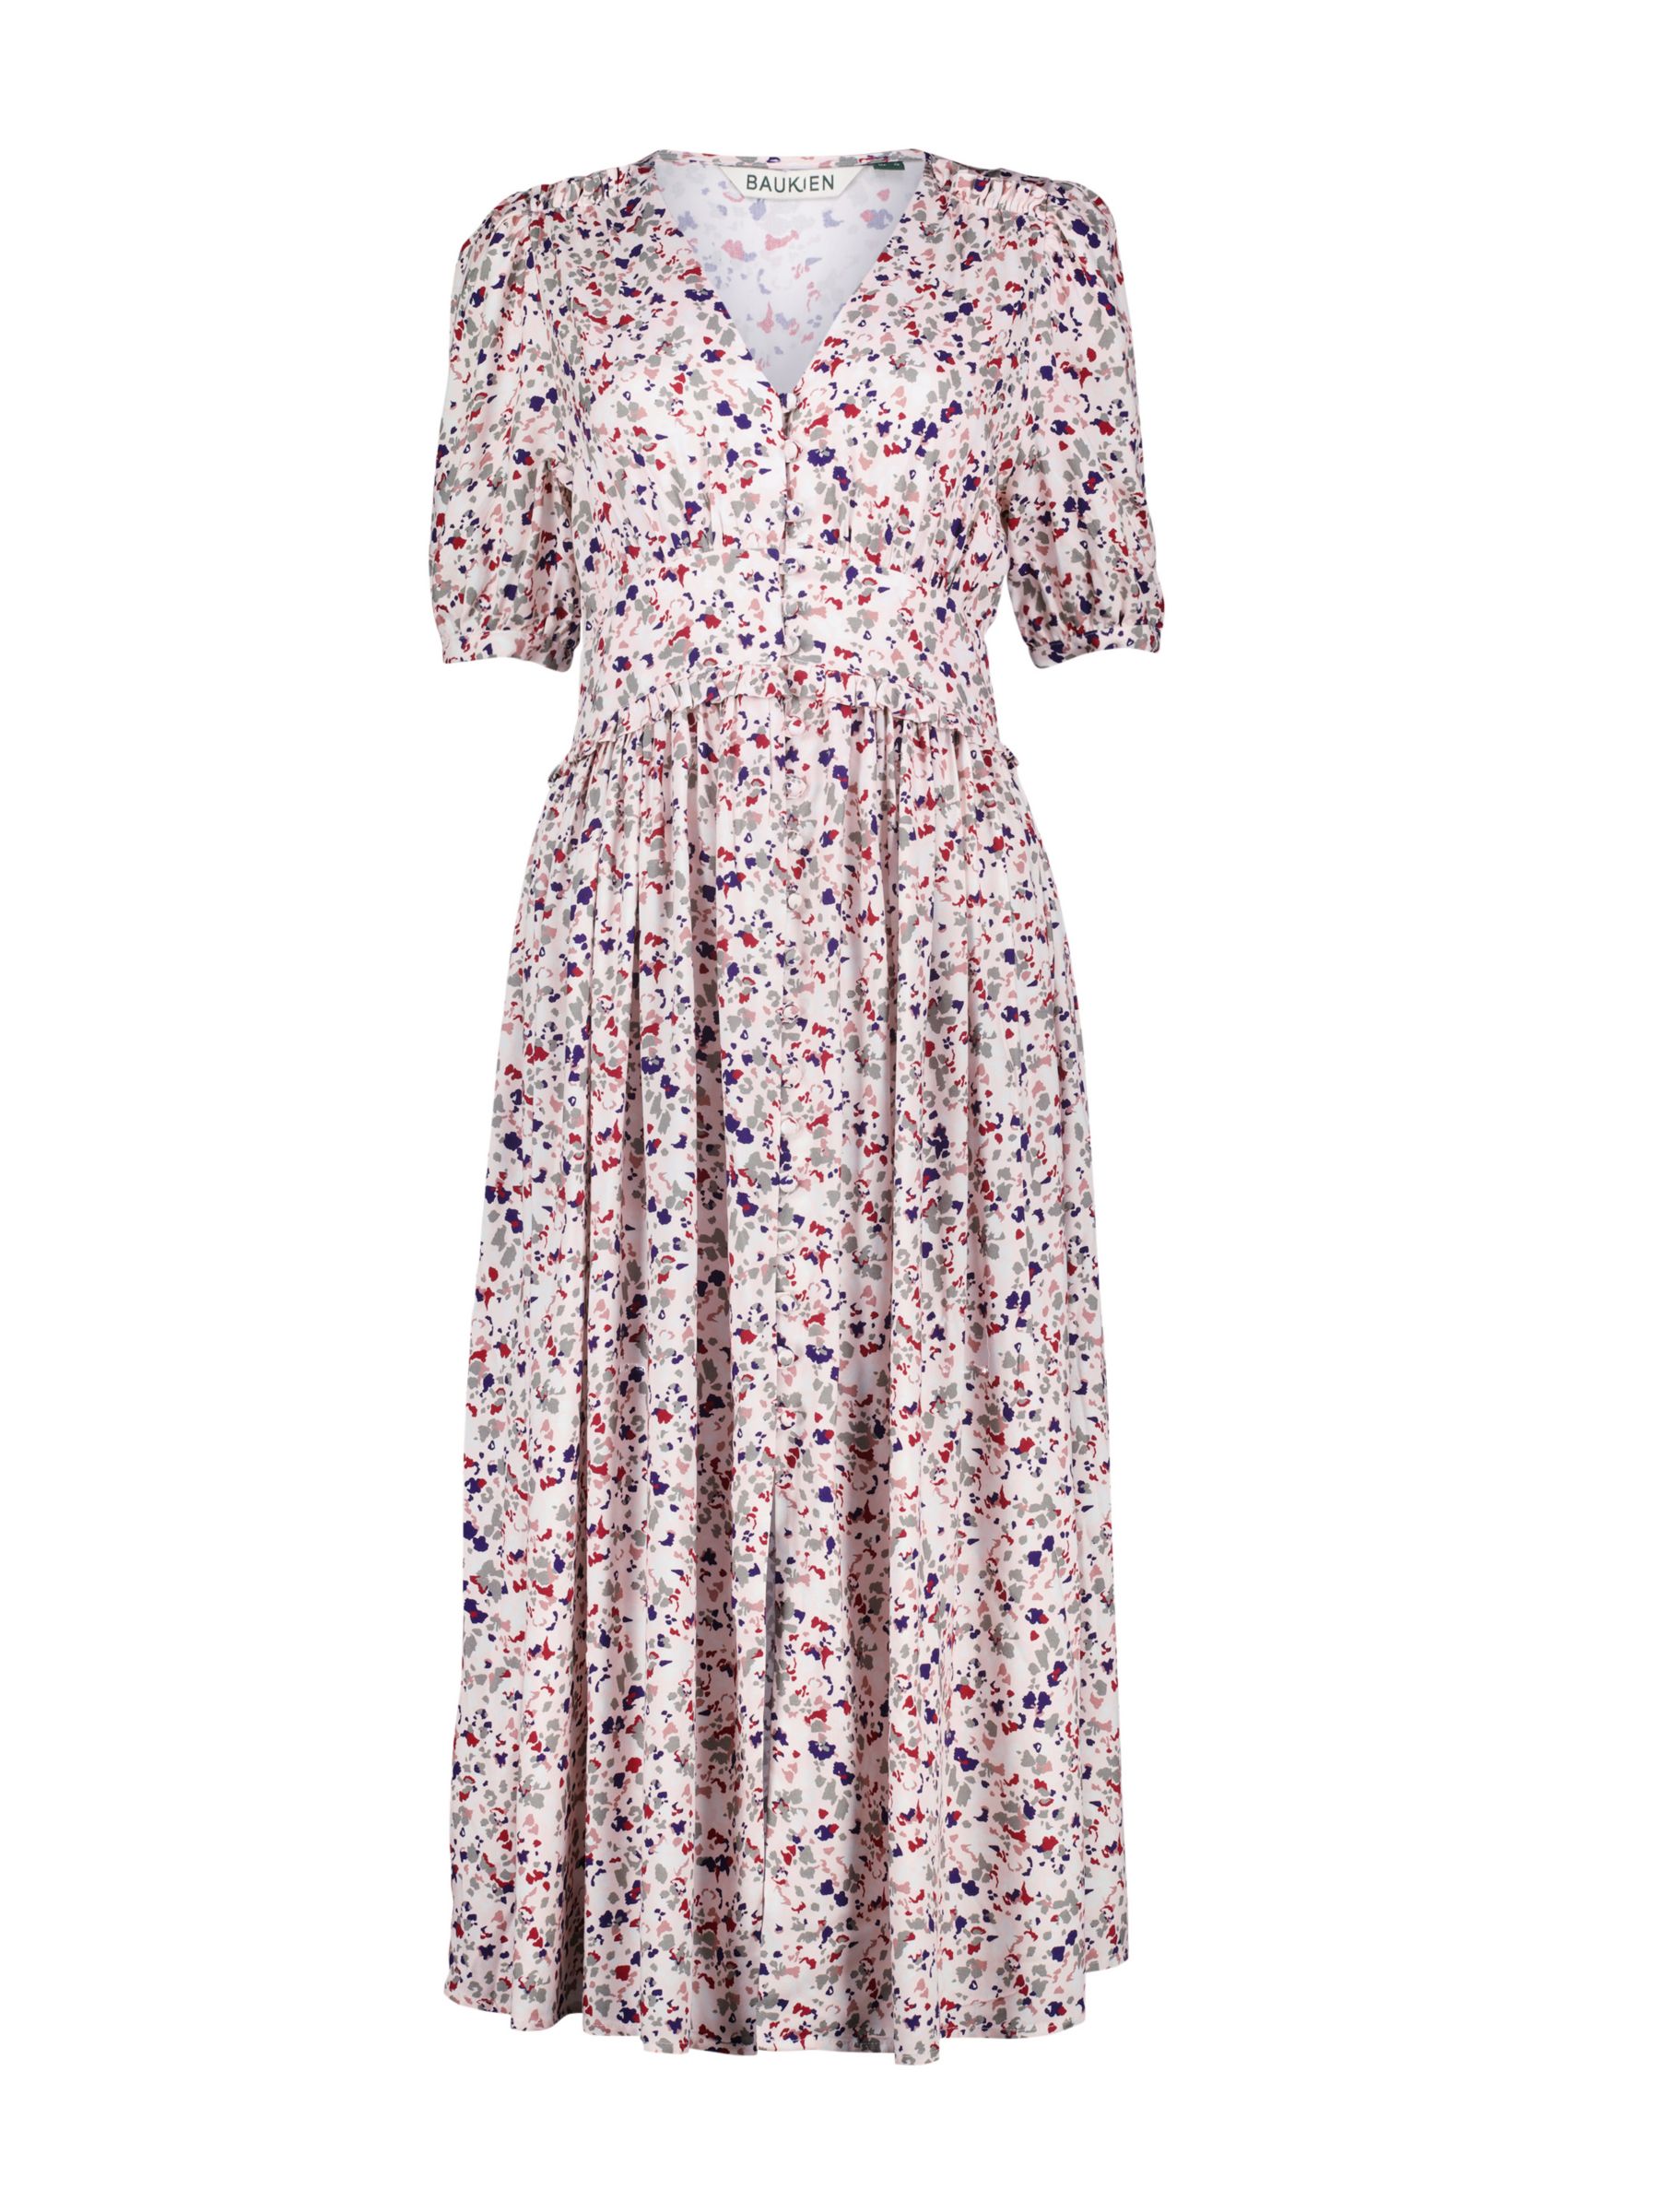 Baukjen Suzy Floral Midi Dress, Powder Pink at John Lewis & Partners